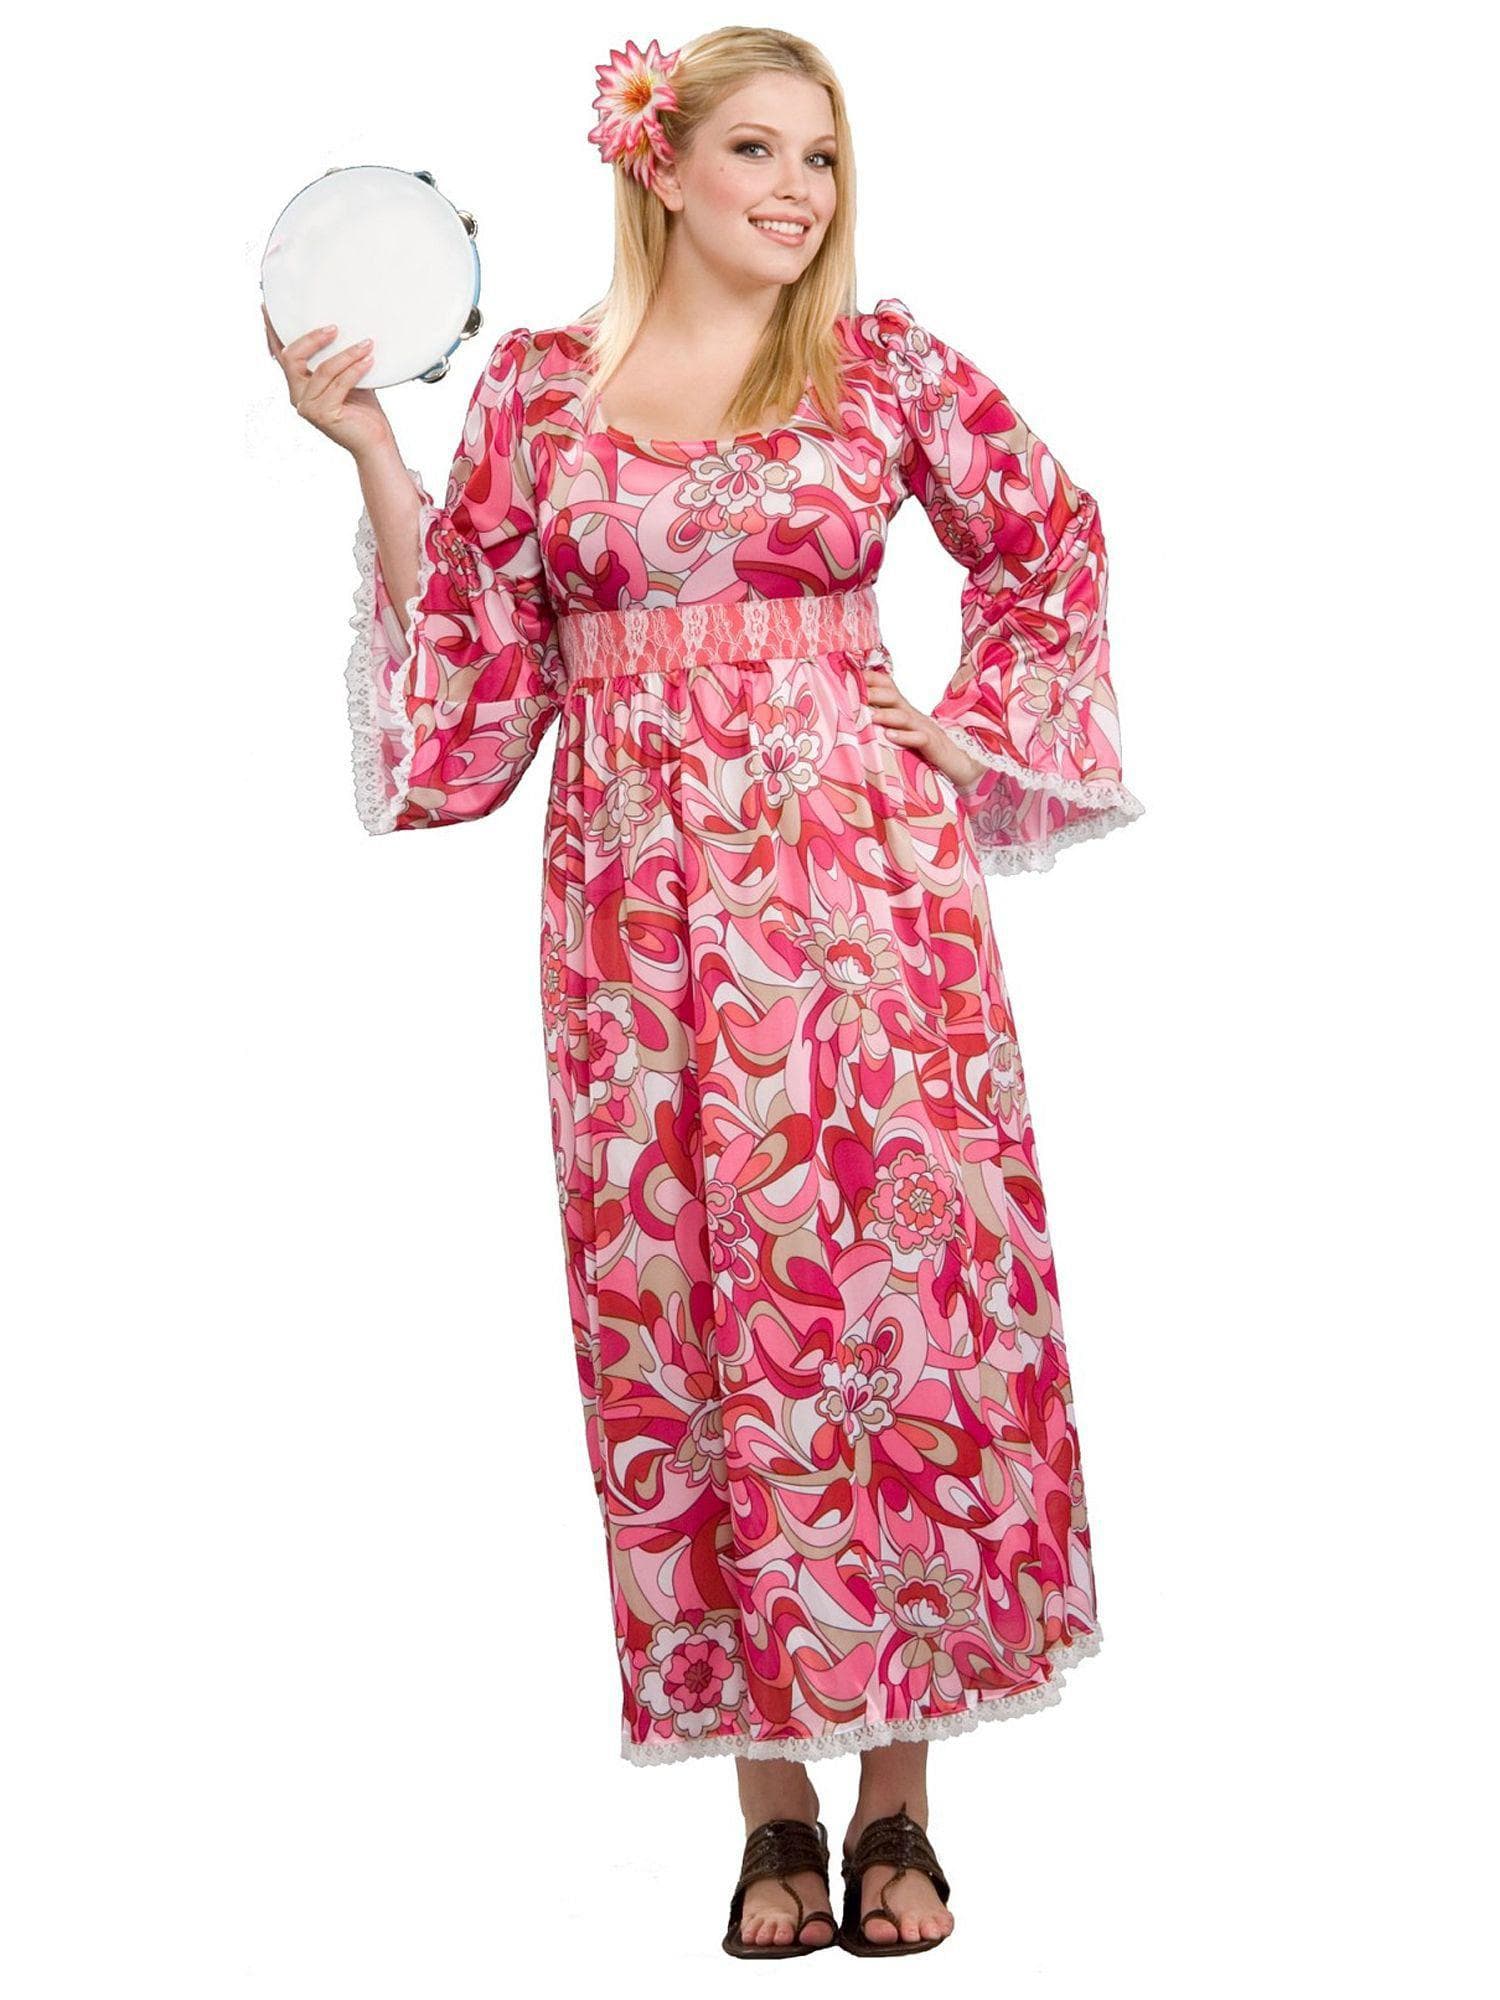 Adult Plus Size Hippie Flower Cos Costume - costumes.com